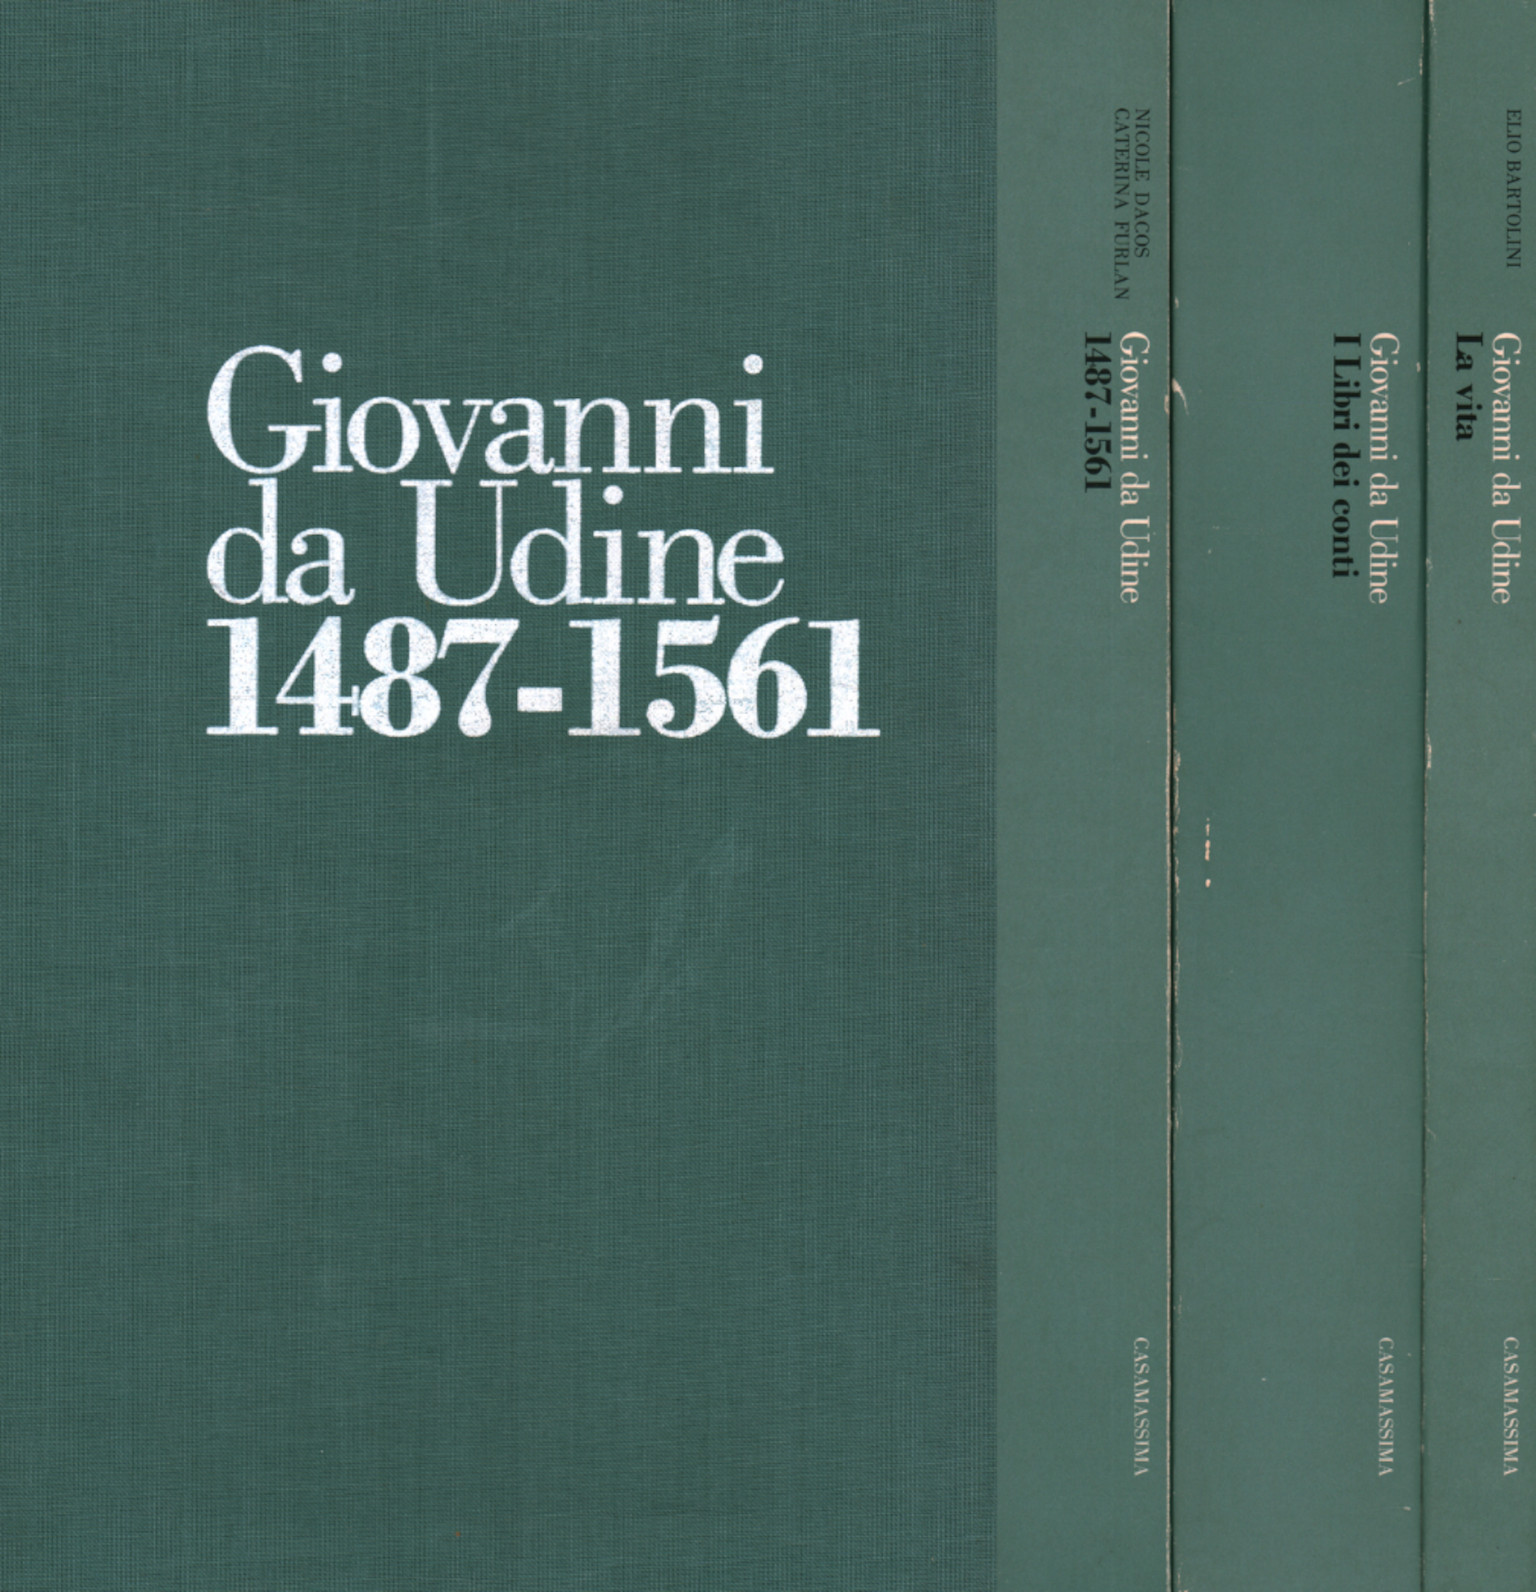 John of Udine (3 Volumes)